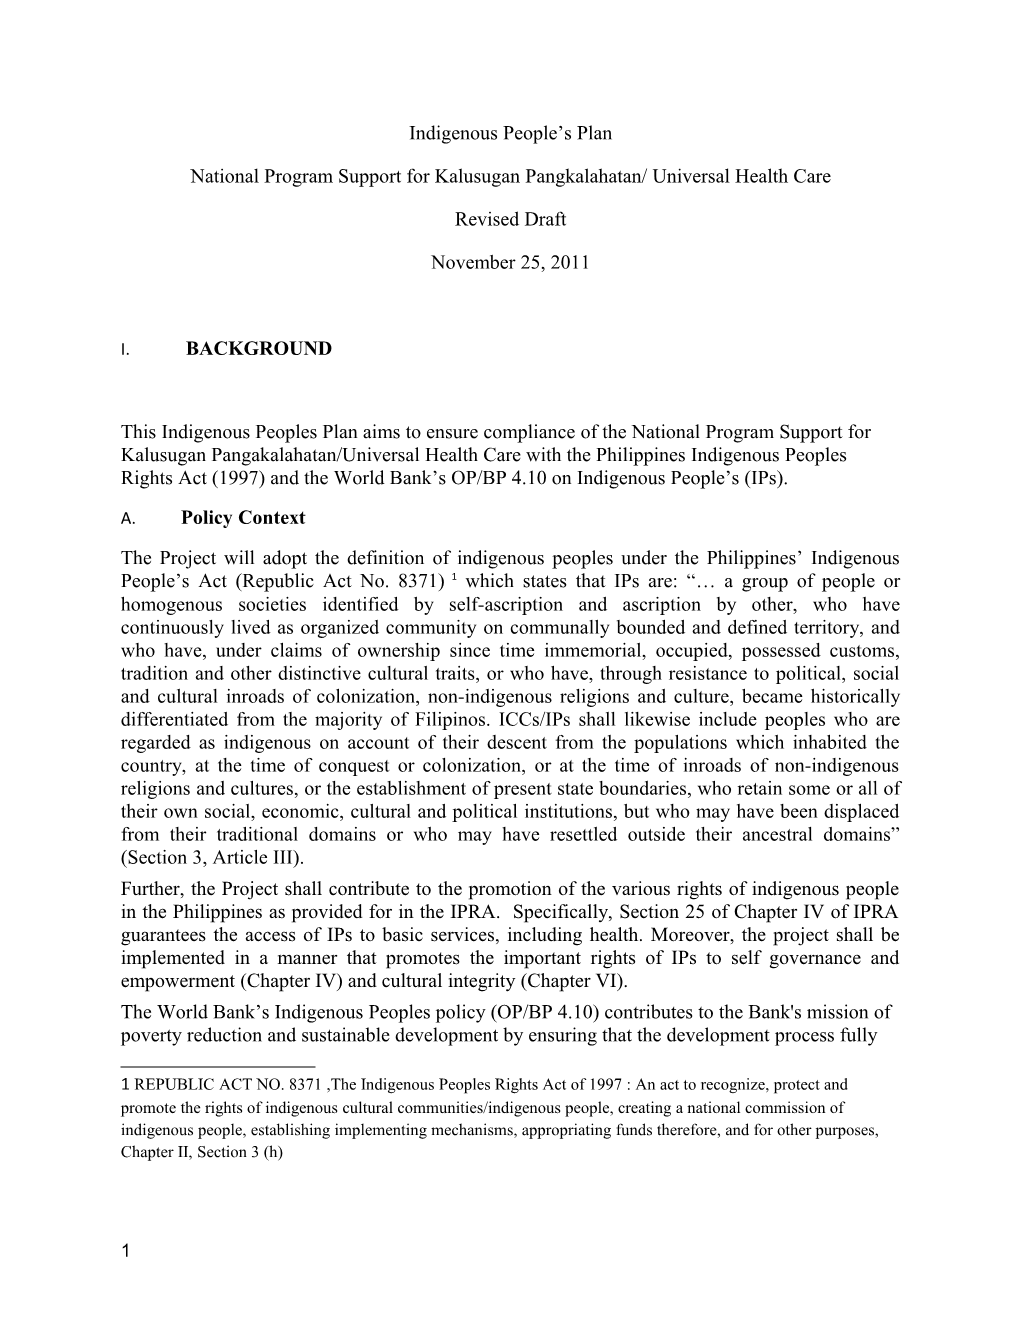 National Program Support for Kalusugan Pangkalahatan/ Universal Health Care